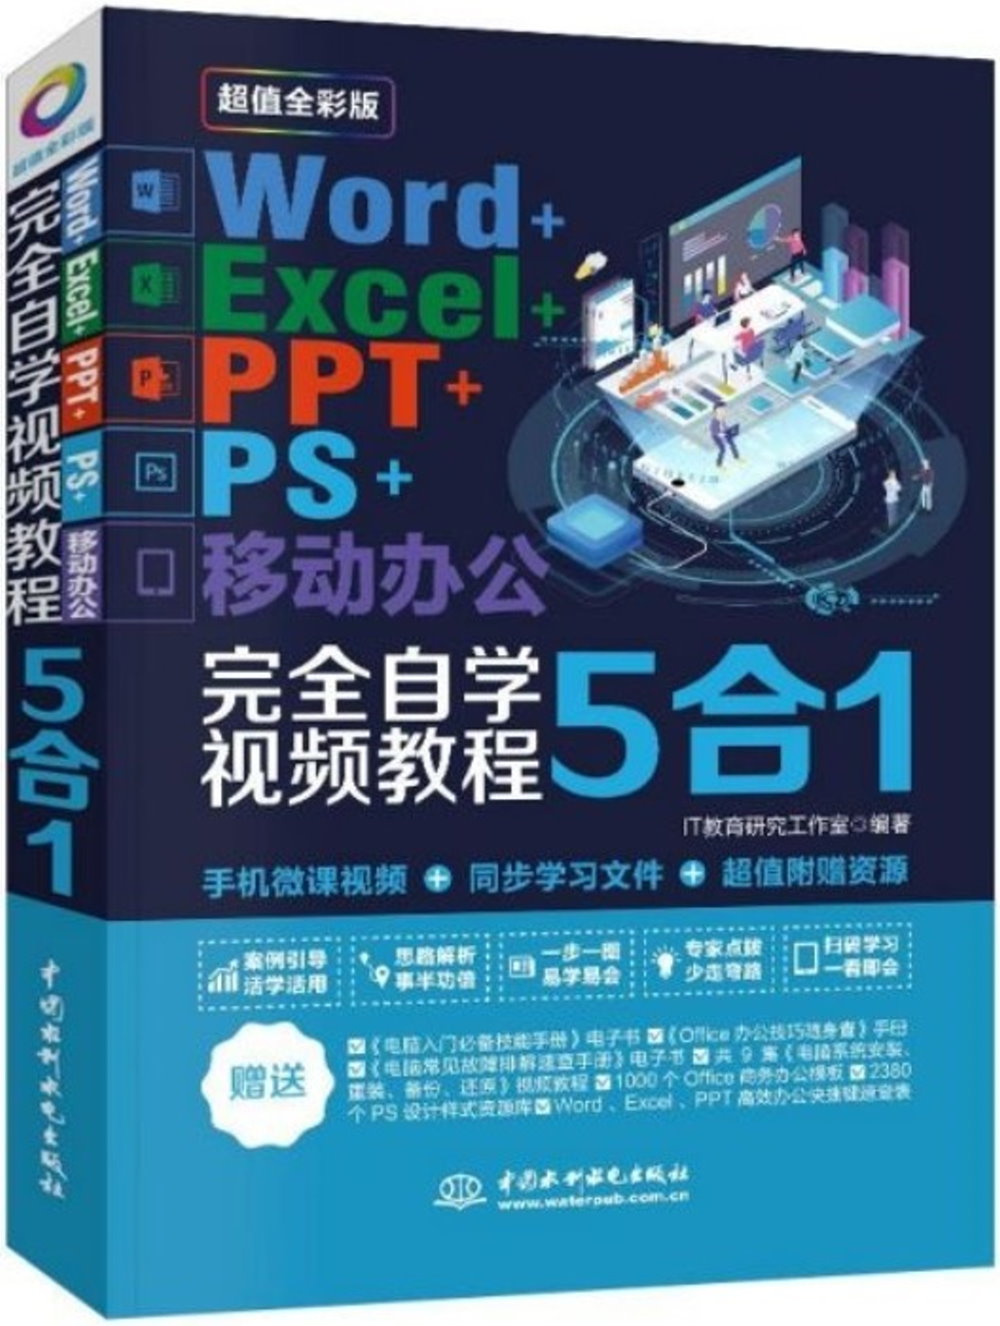 Word+Excel+PPT+PS+移動辦公5合1完全自學視頻教程(超值全彩版)